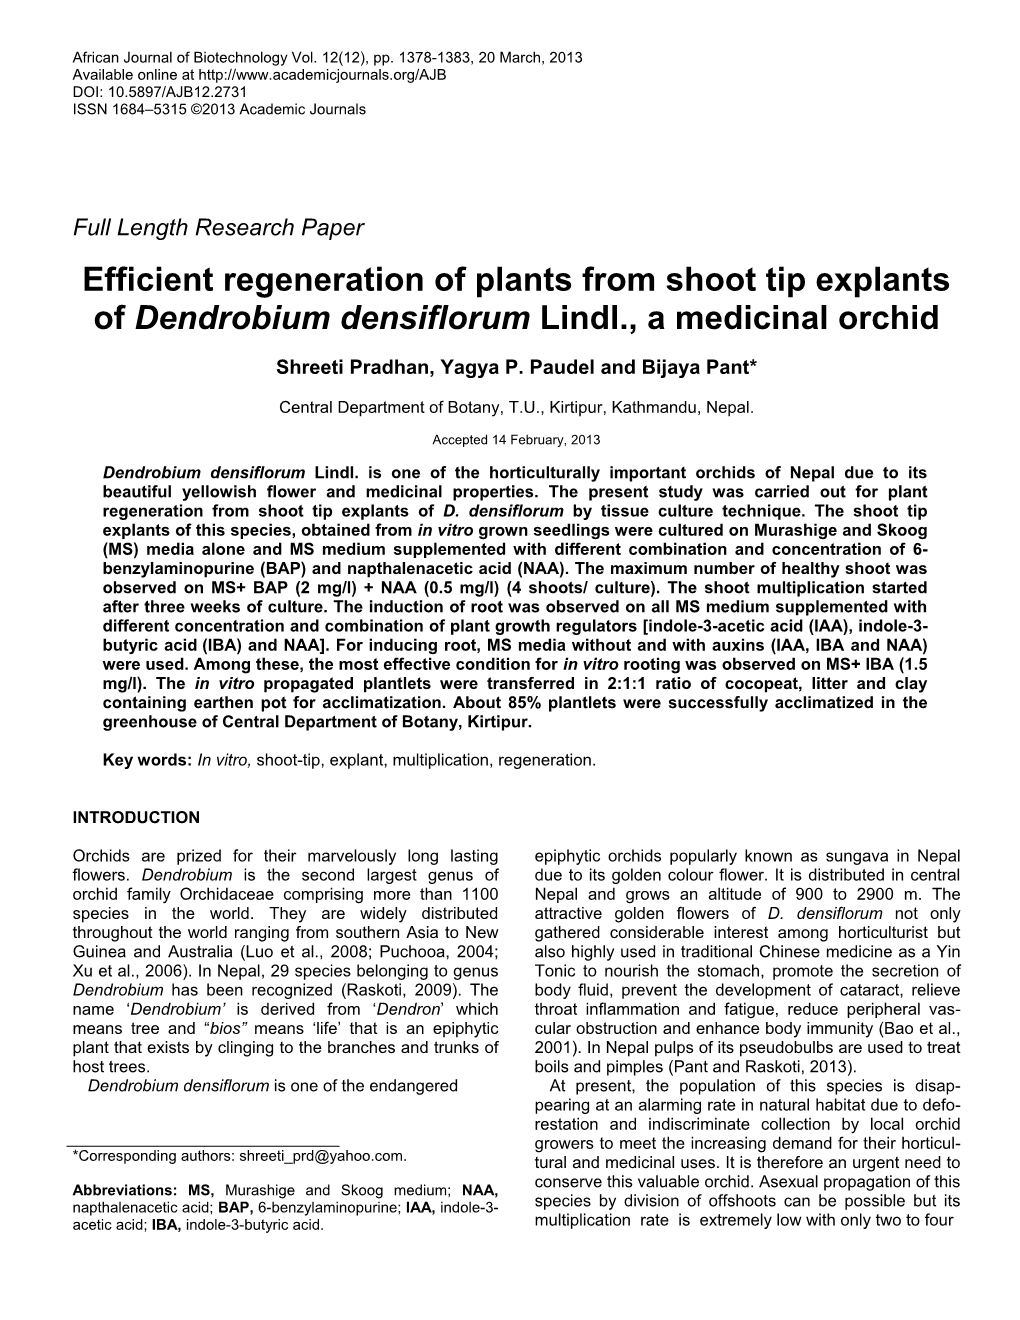 Efficient Regeneration of Plants from Shoot Tip Explants of Dendrobium Densiflorum Lindl., a Medicinal Orchid